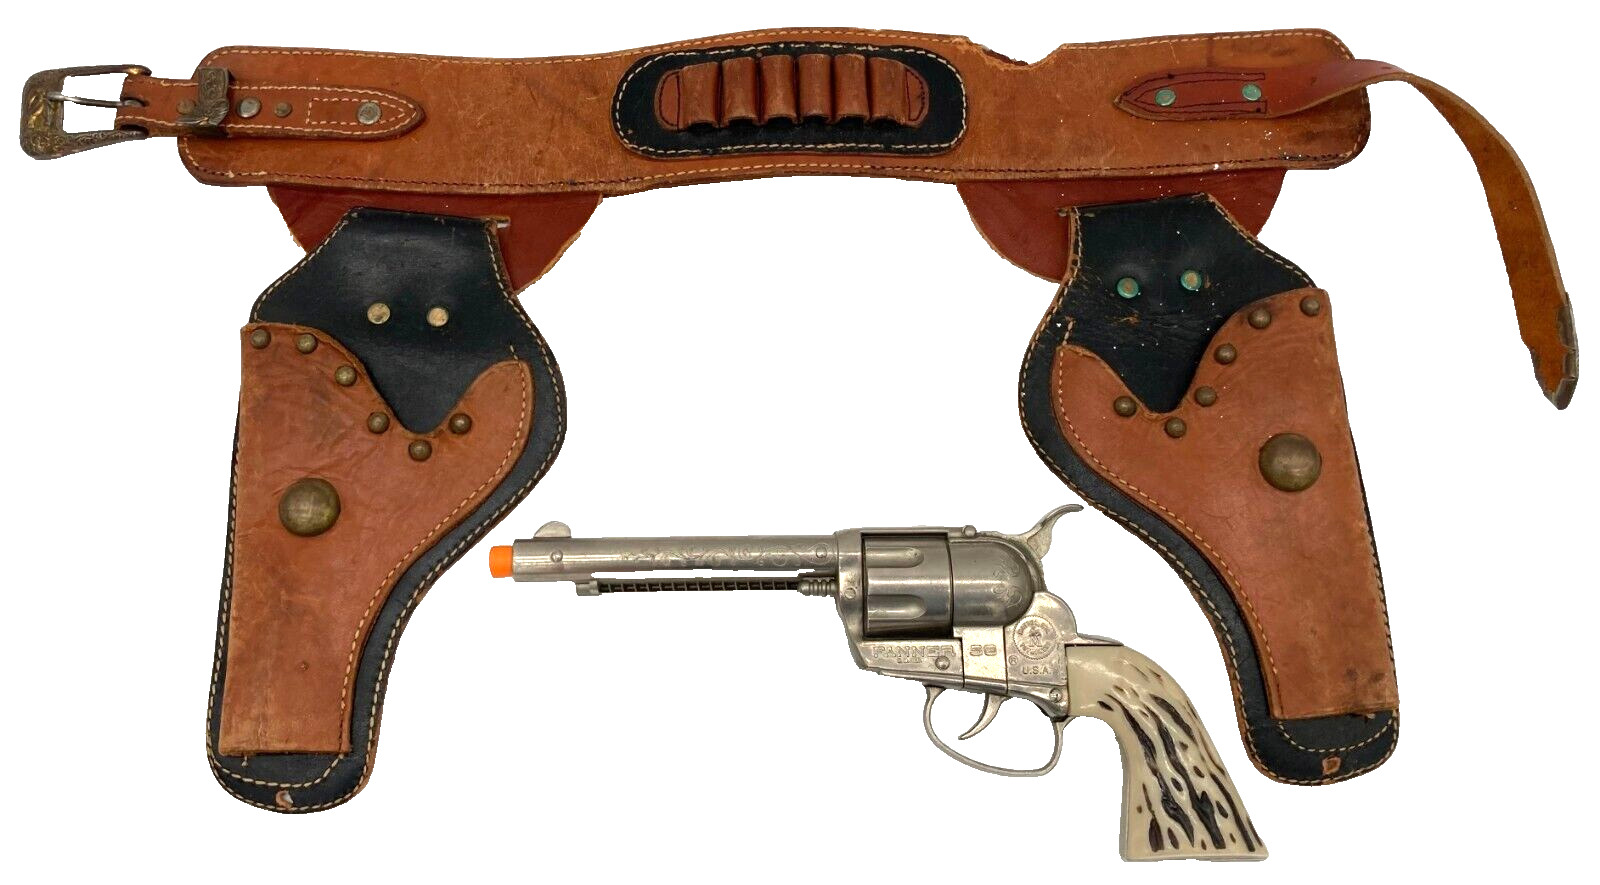 VTG FANNER 50 Pistol Cap Gun MATTEL Fixed Cylinder Antique W/ Leather Holster